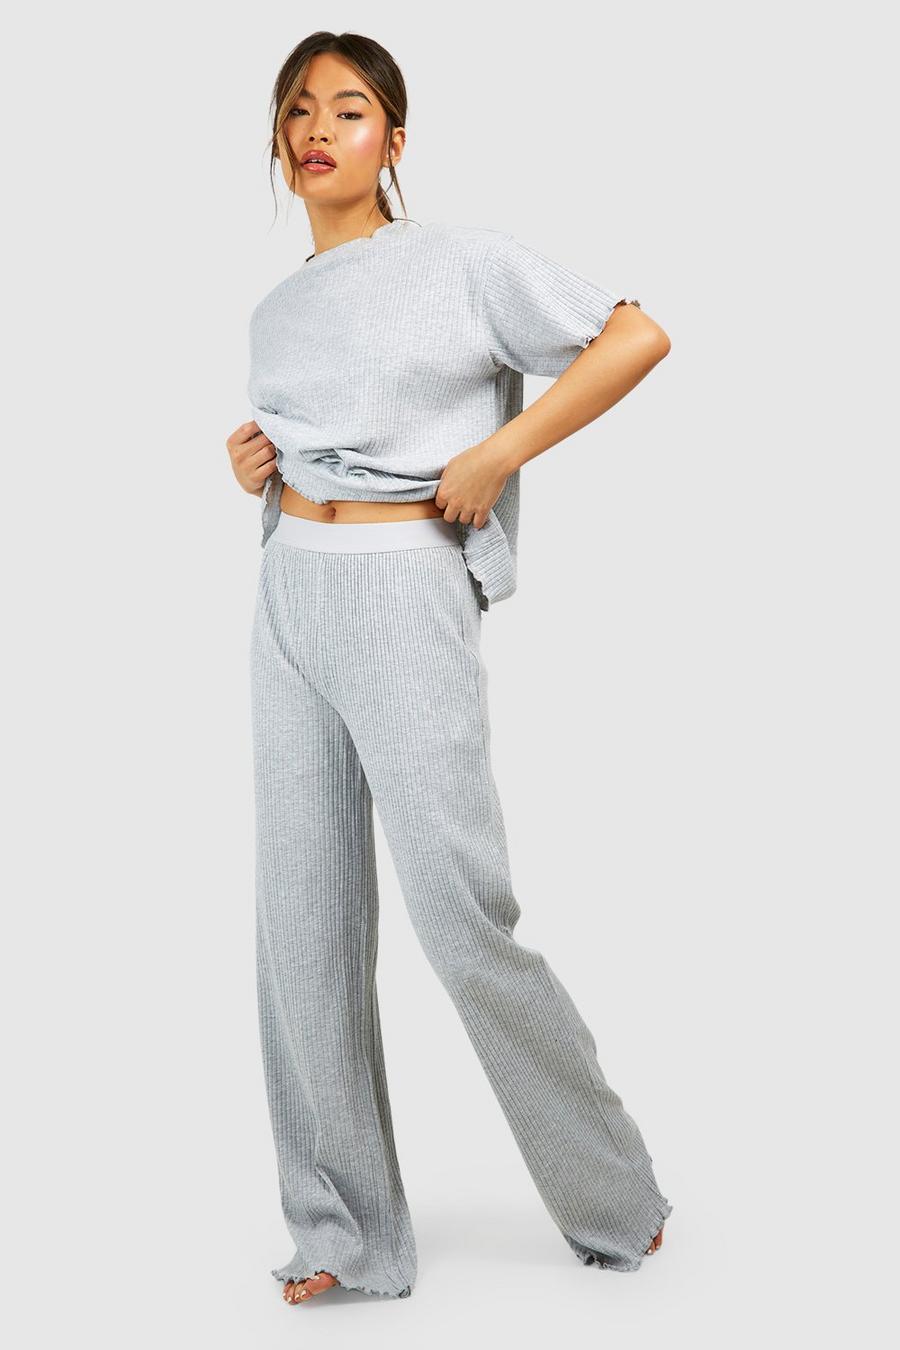 Lounge Pants For Women, Lounge Shorts